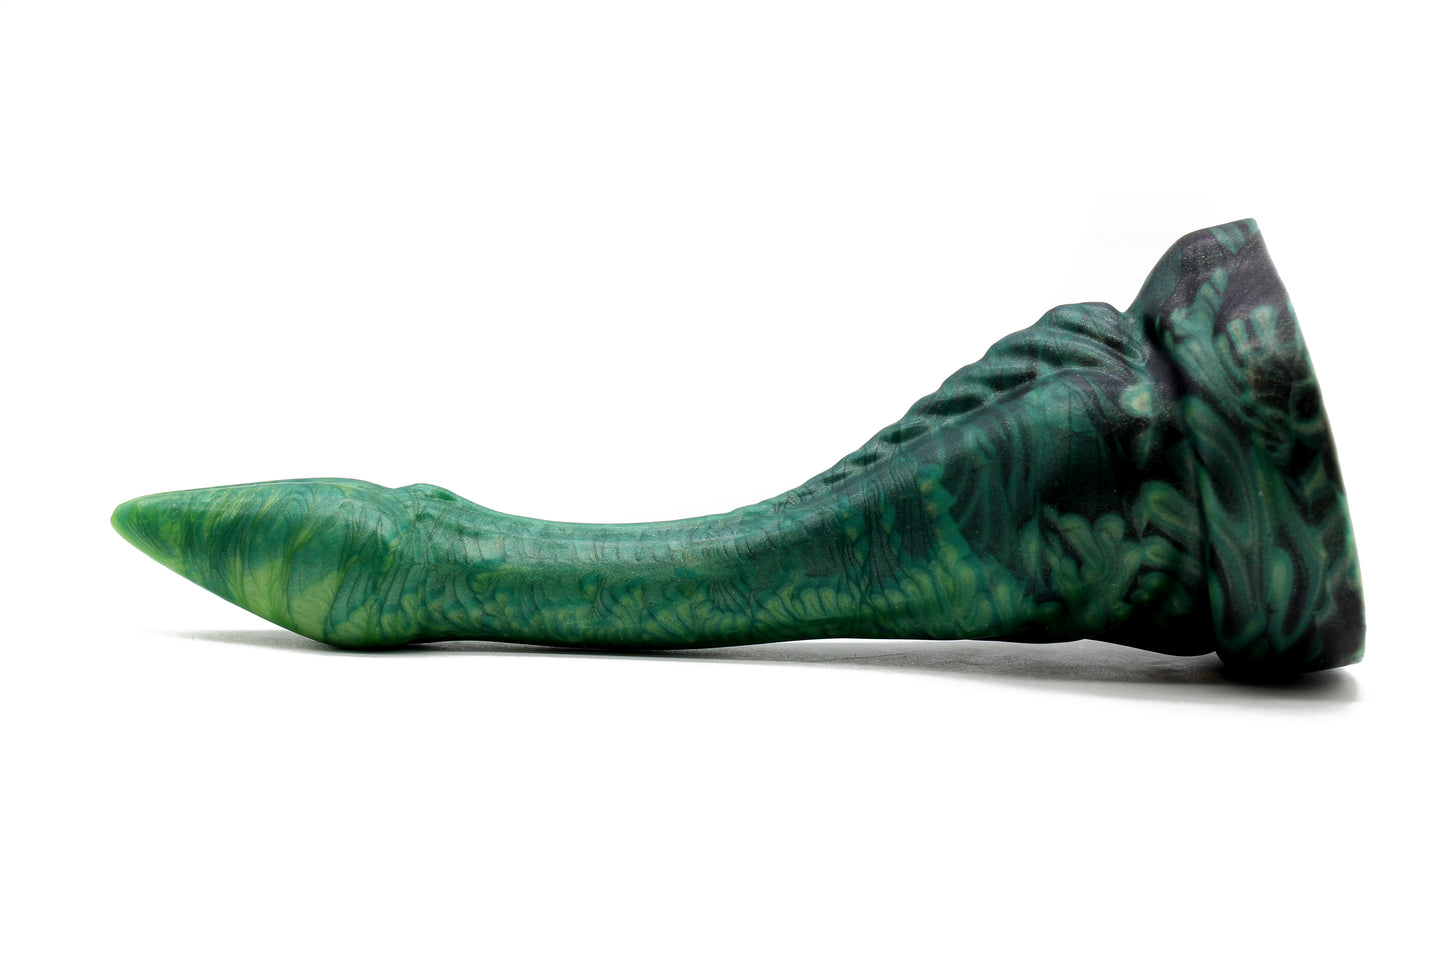 The Stilio Raptor Tail Dildo